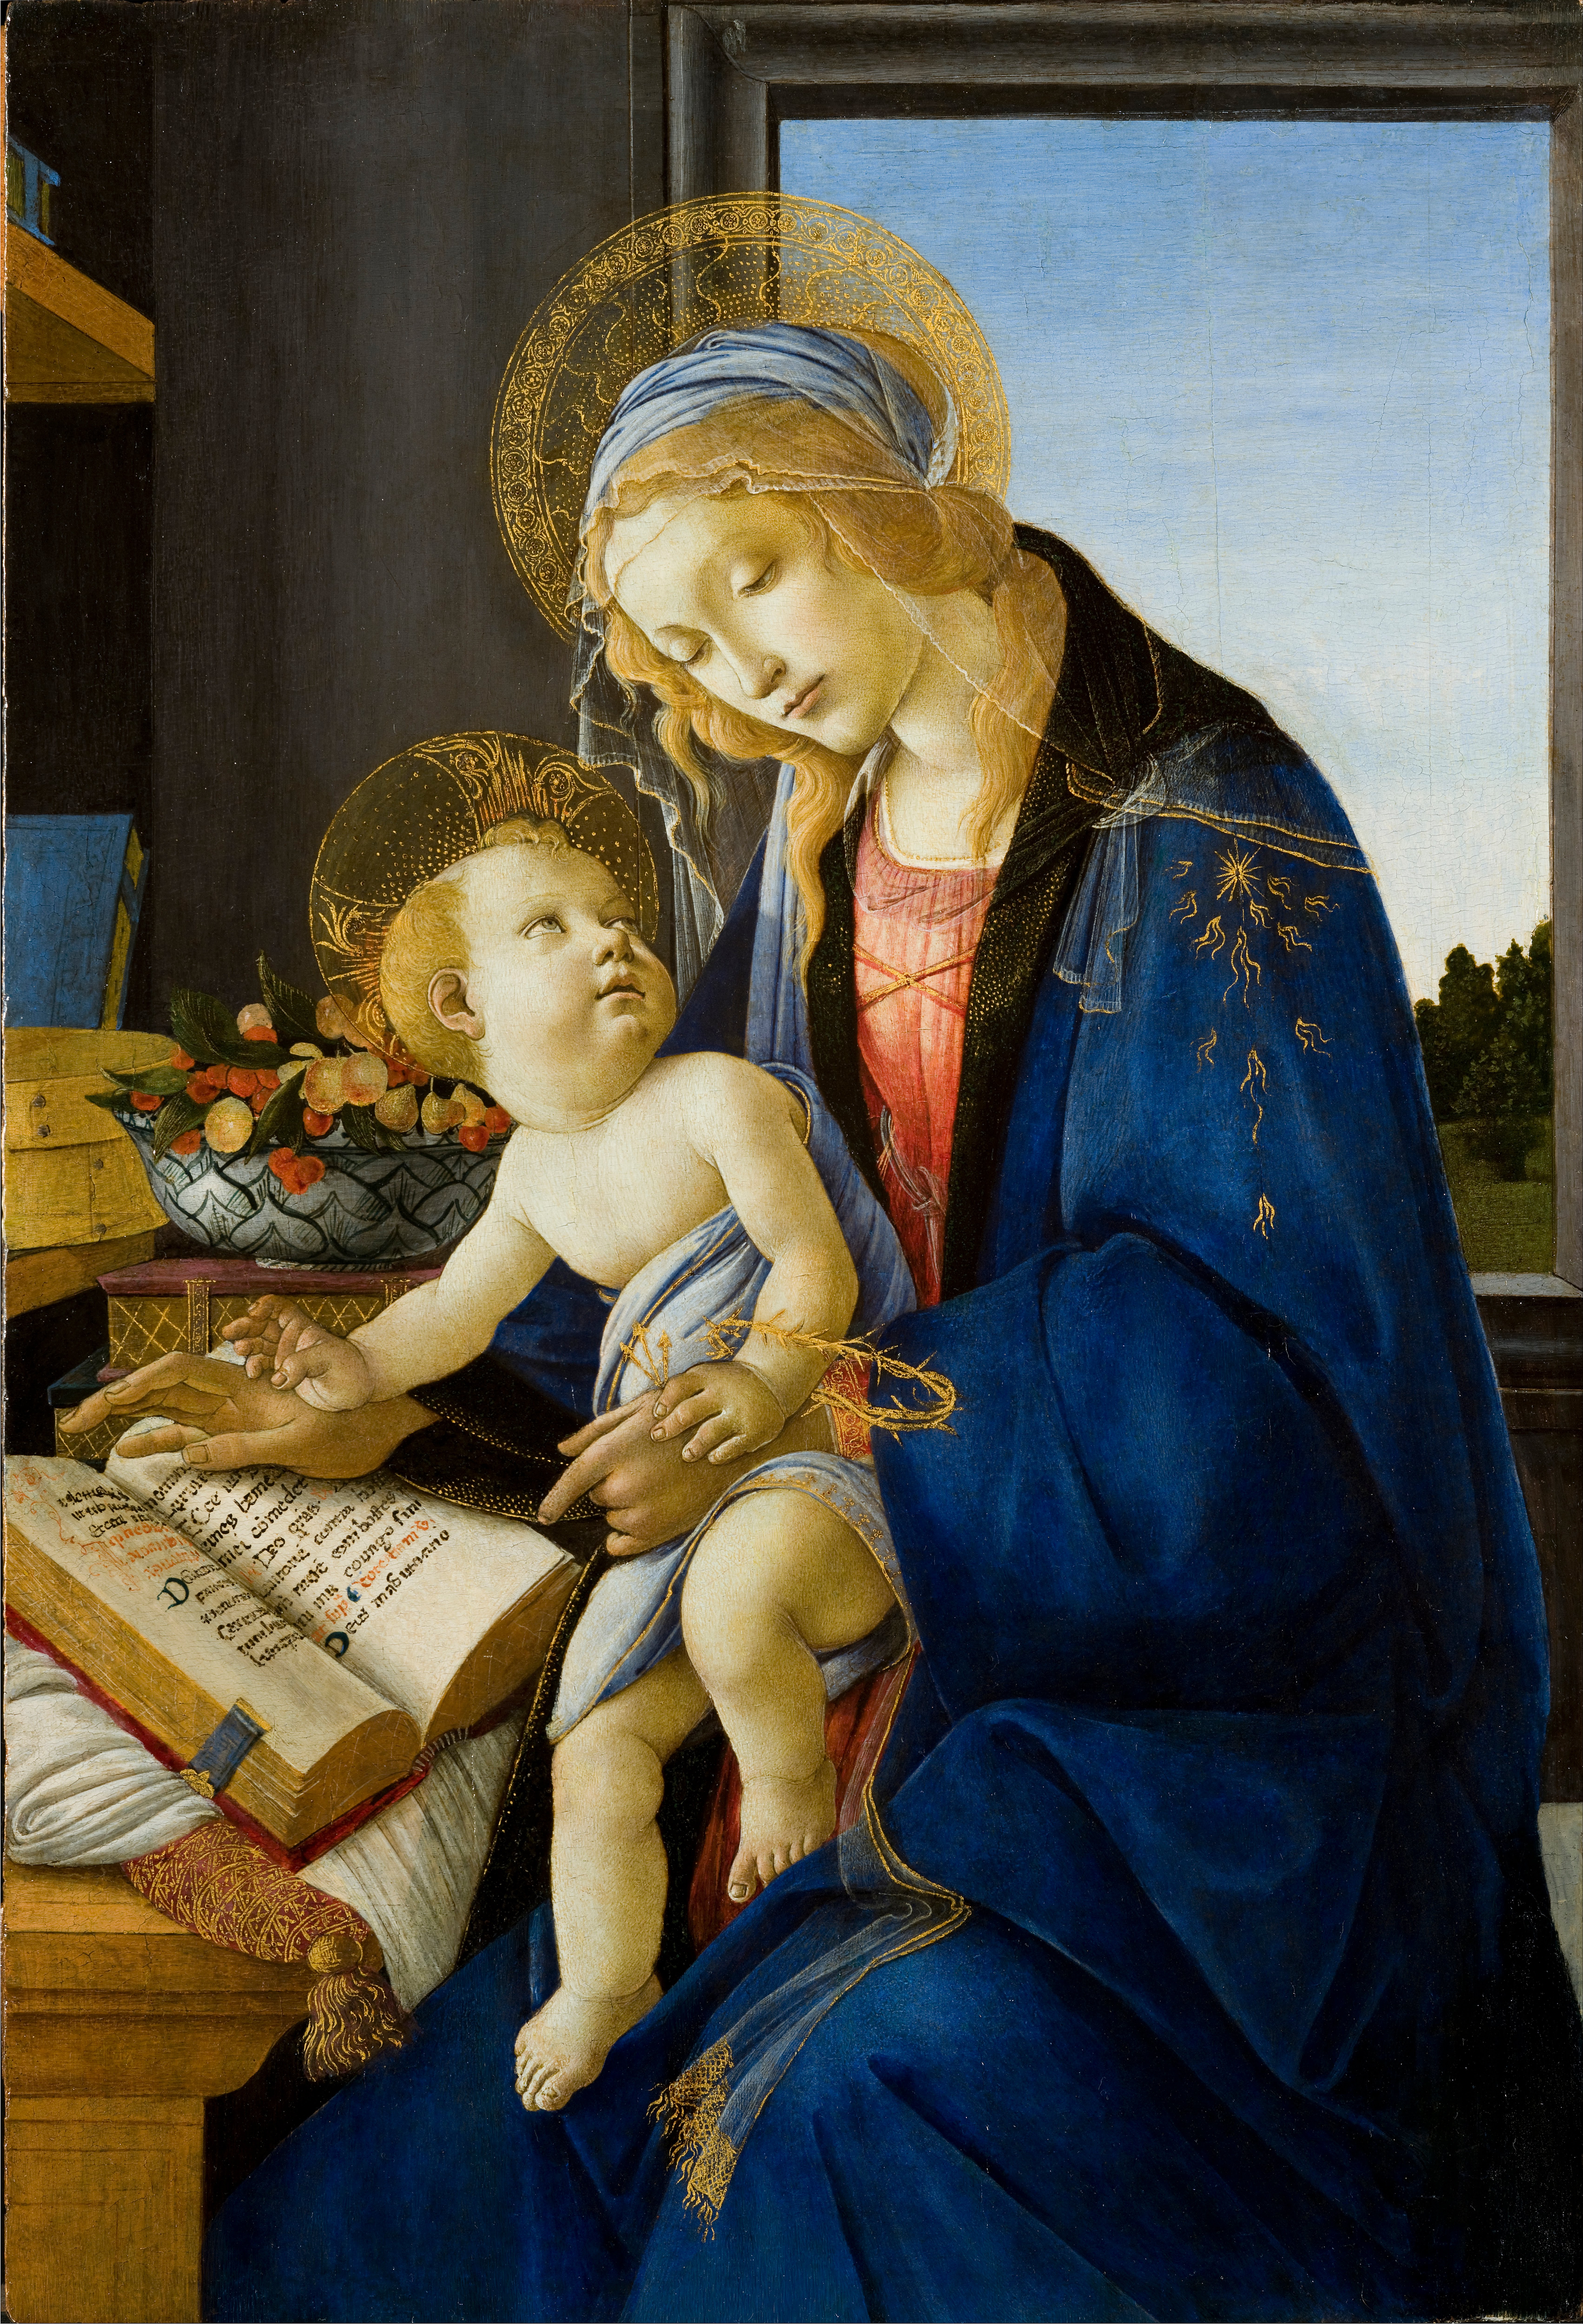 nun portraits mexico: Sandro Botticelli, Madonna of the Book, 1480, Museo Poldi Pezzoli, Milan, Italy.
